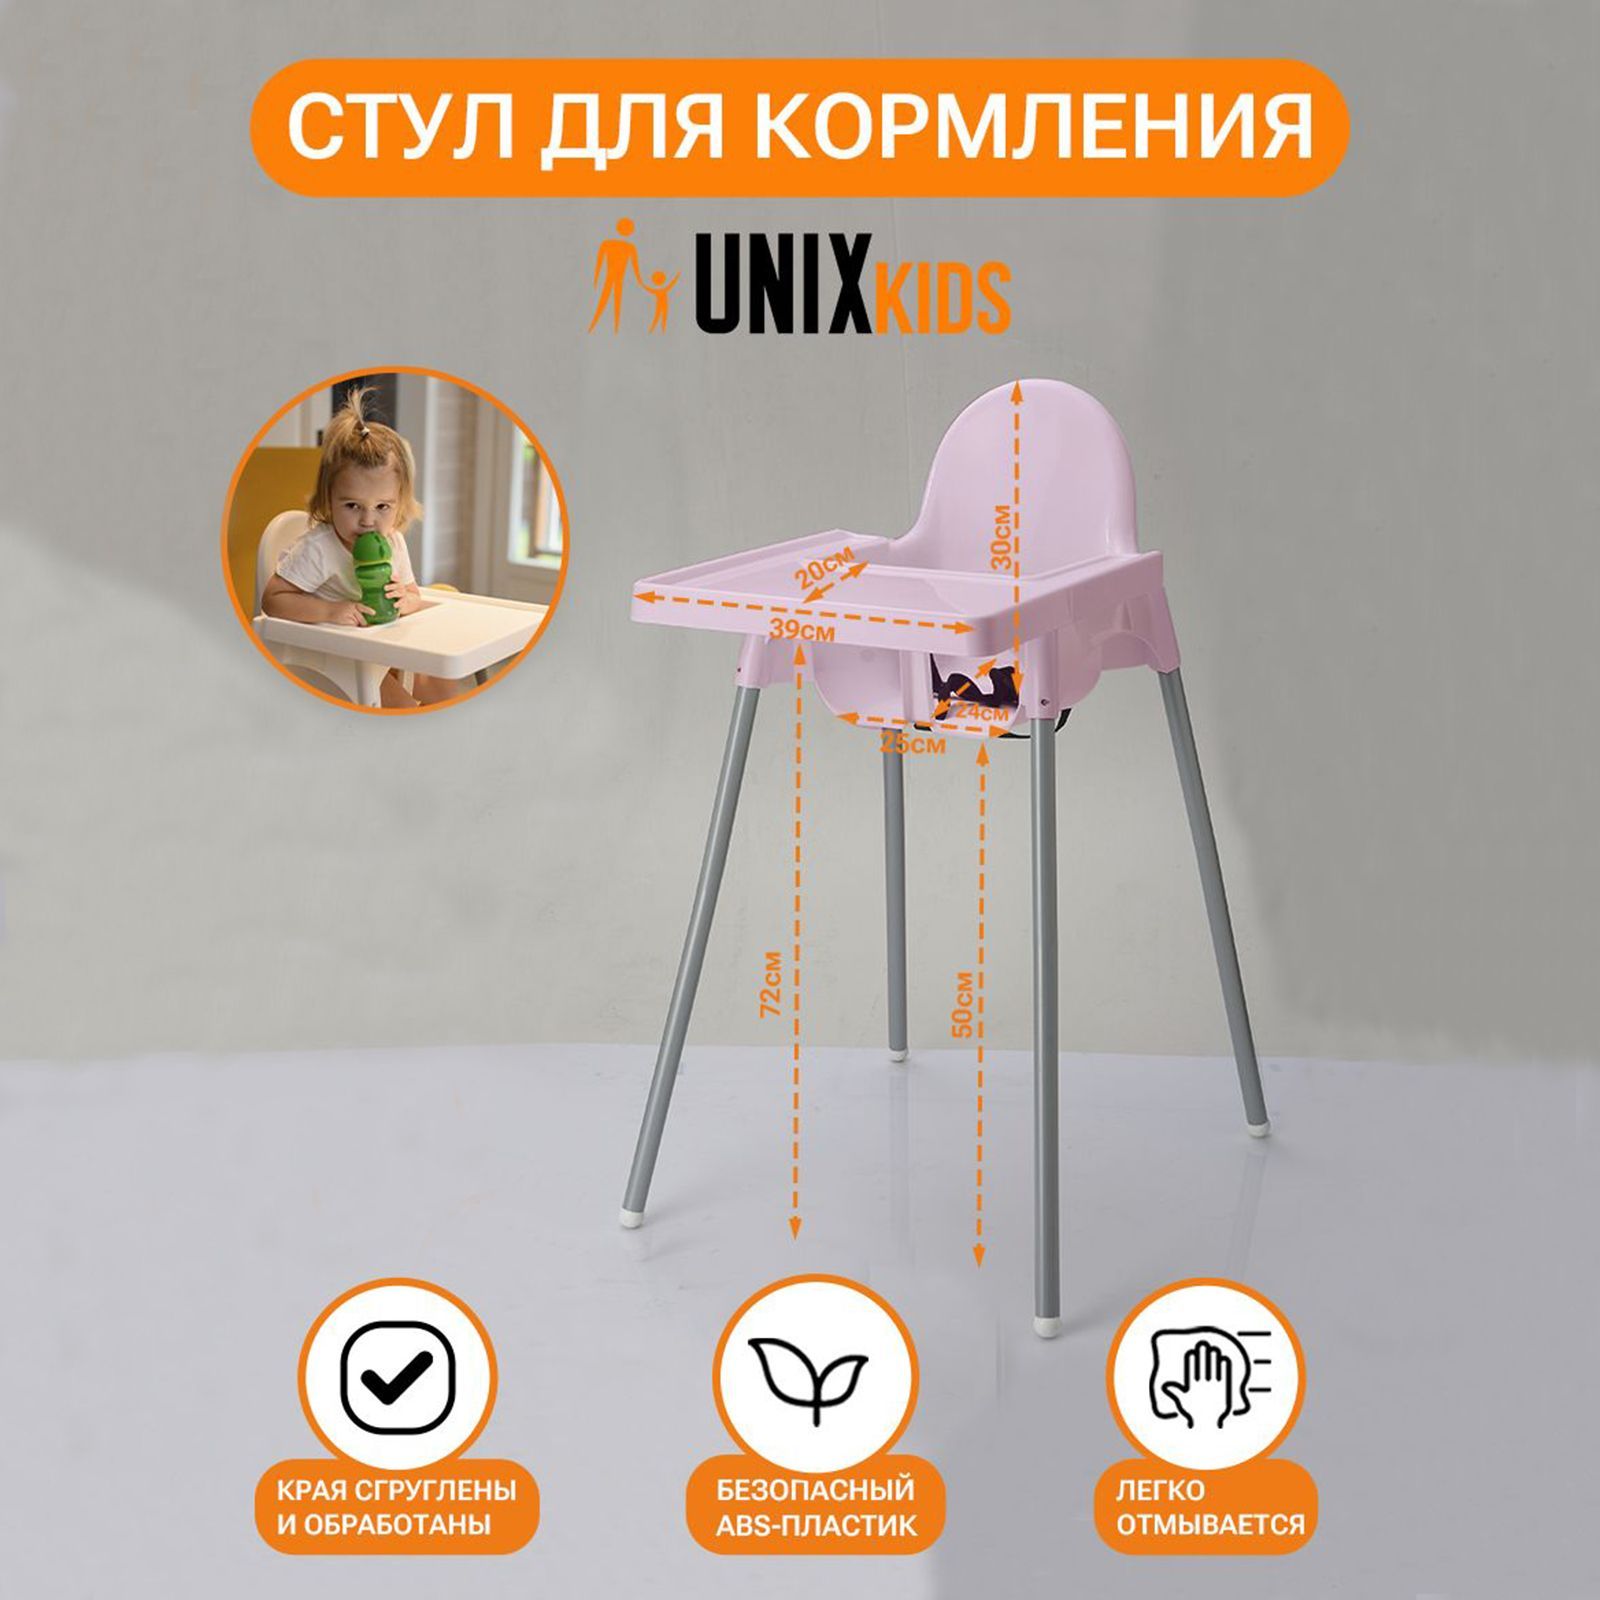 Стульчик для кормления UNIX Kids Fixed Rose - аналог ИКЕА, со столиком стульчик для кормления polini kids 252 звездное сияние